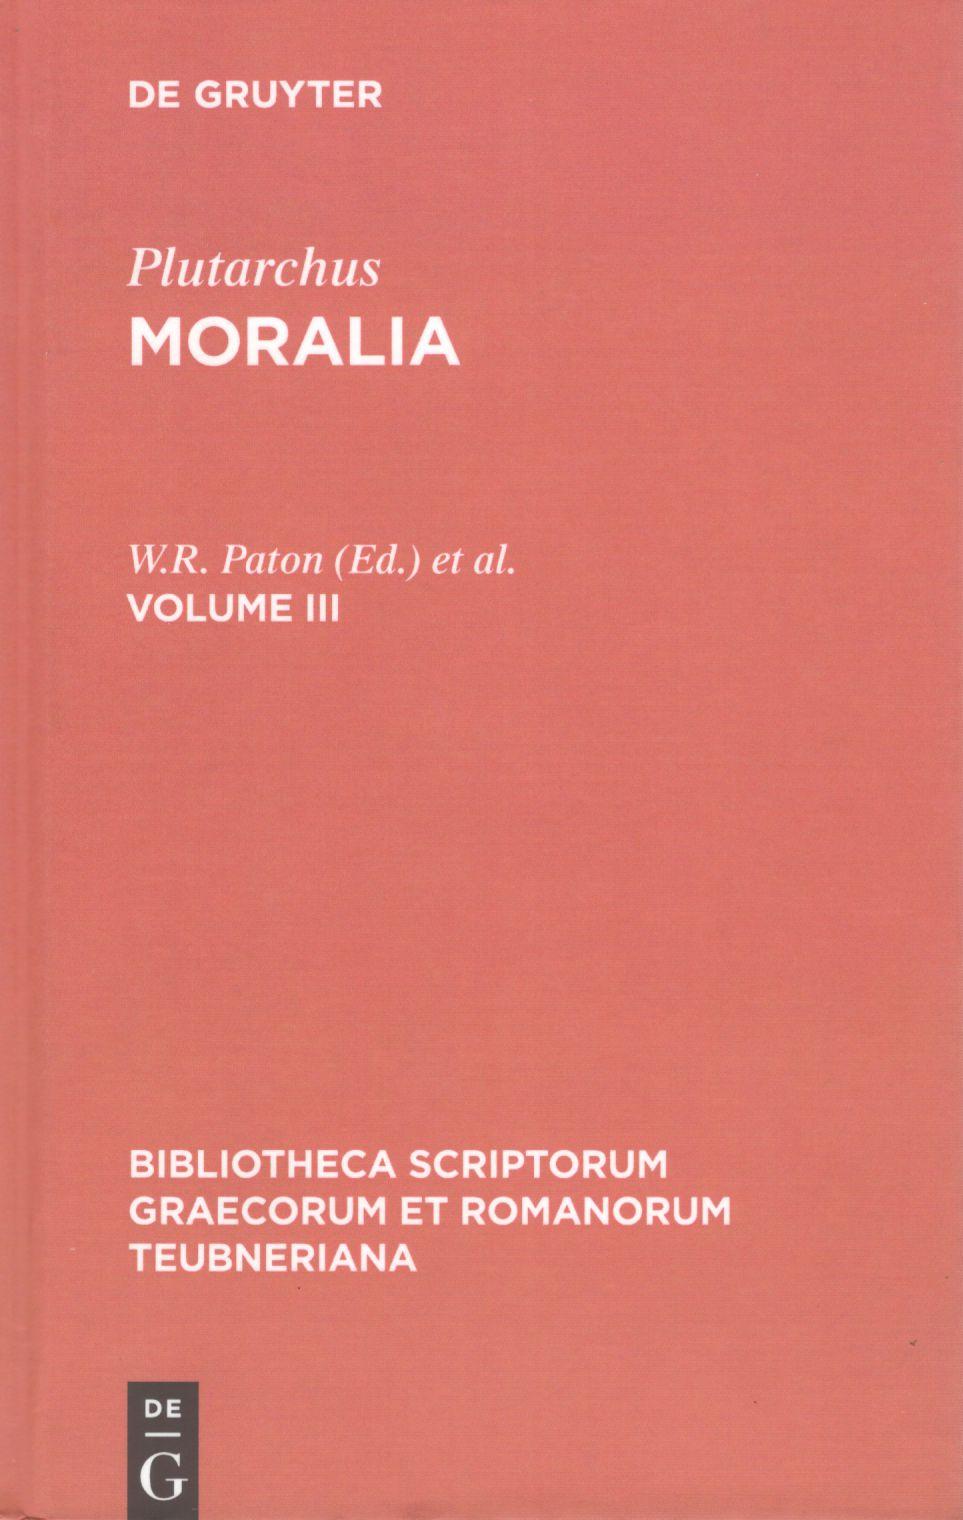 PLUTARCHI MORALIA VOLUME III